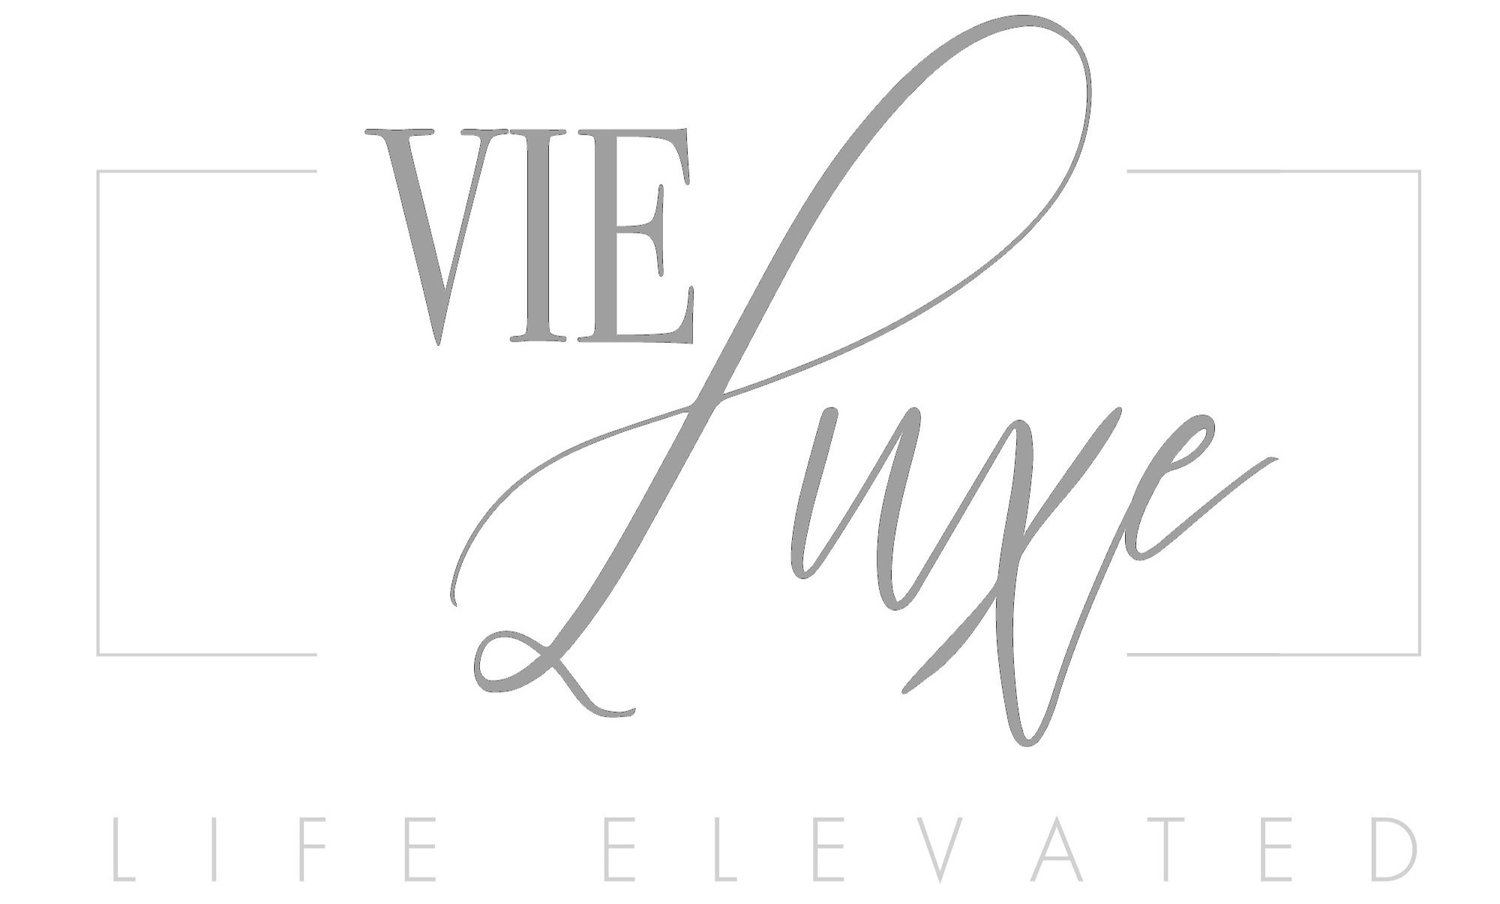 Vie Luxe - Life Elevated